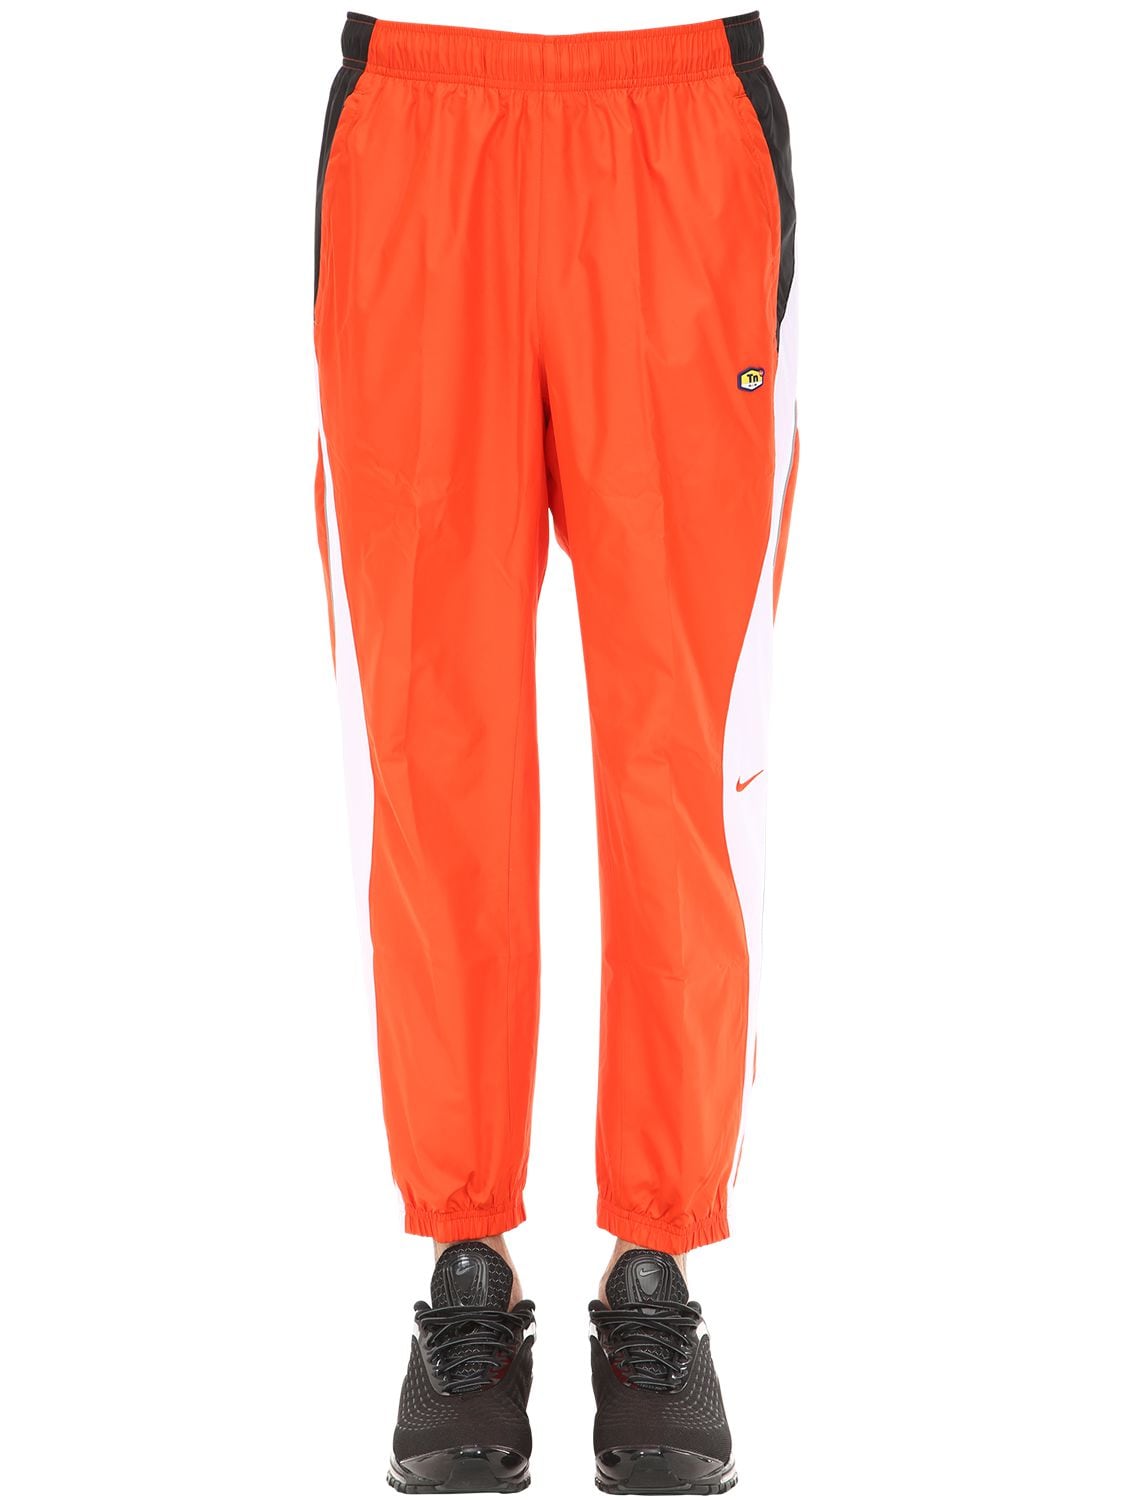 nike orange track pants